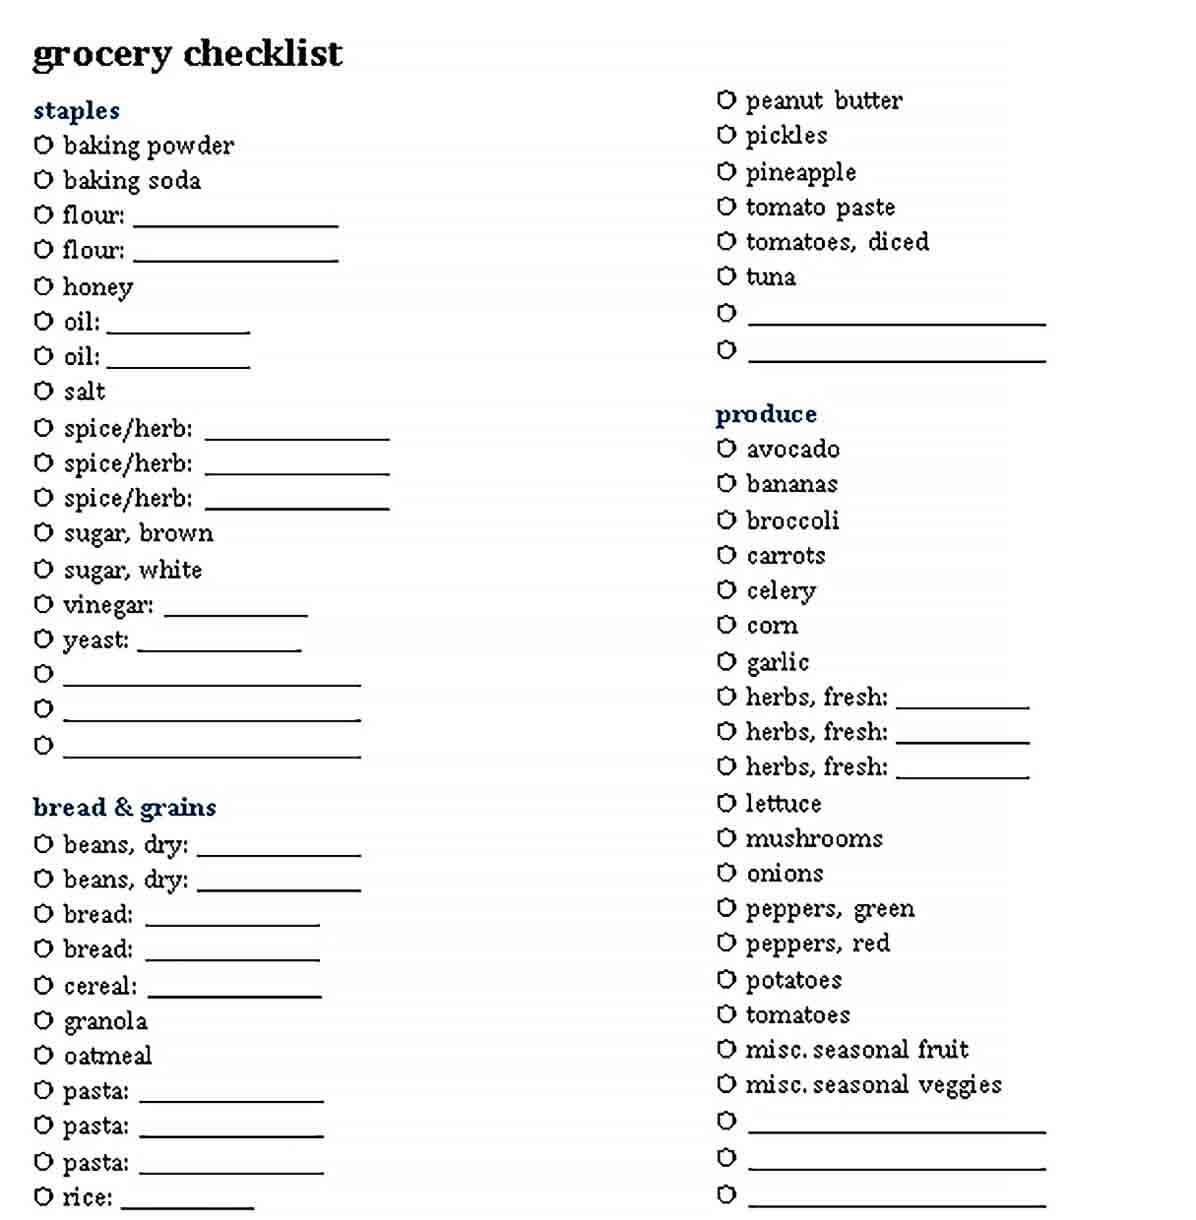 Sample grocery checklist pdf format 1 1